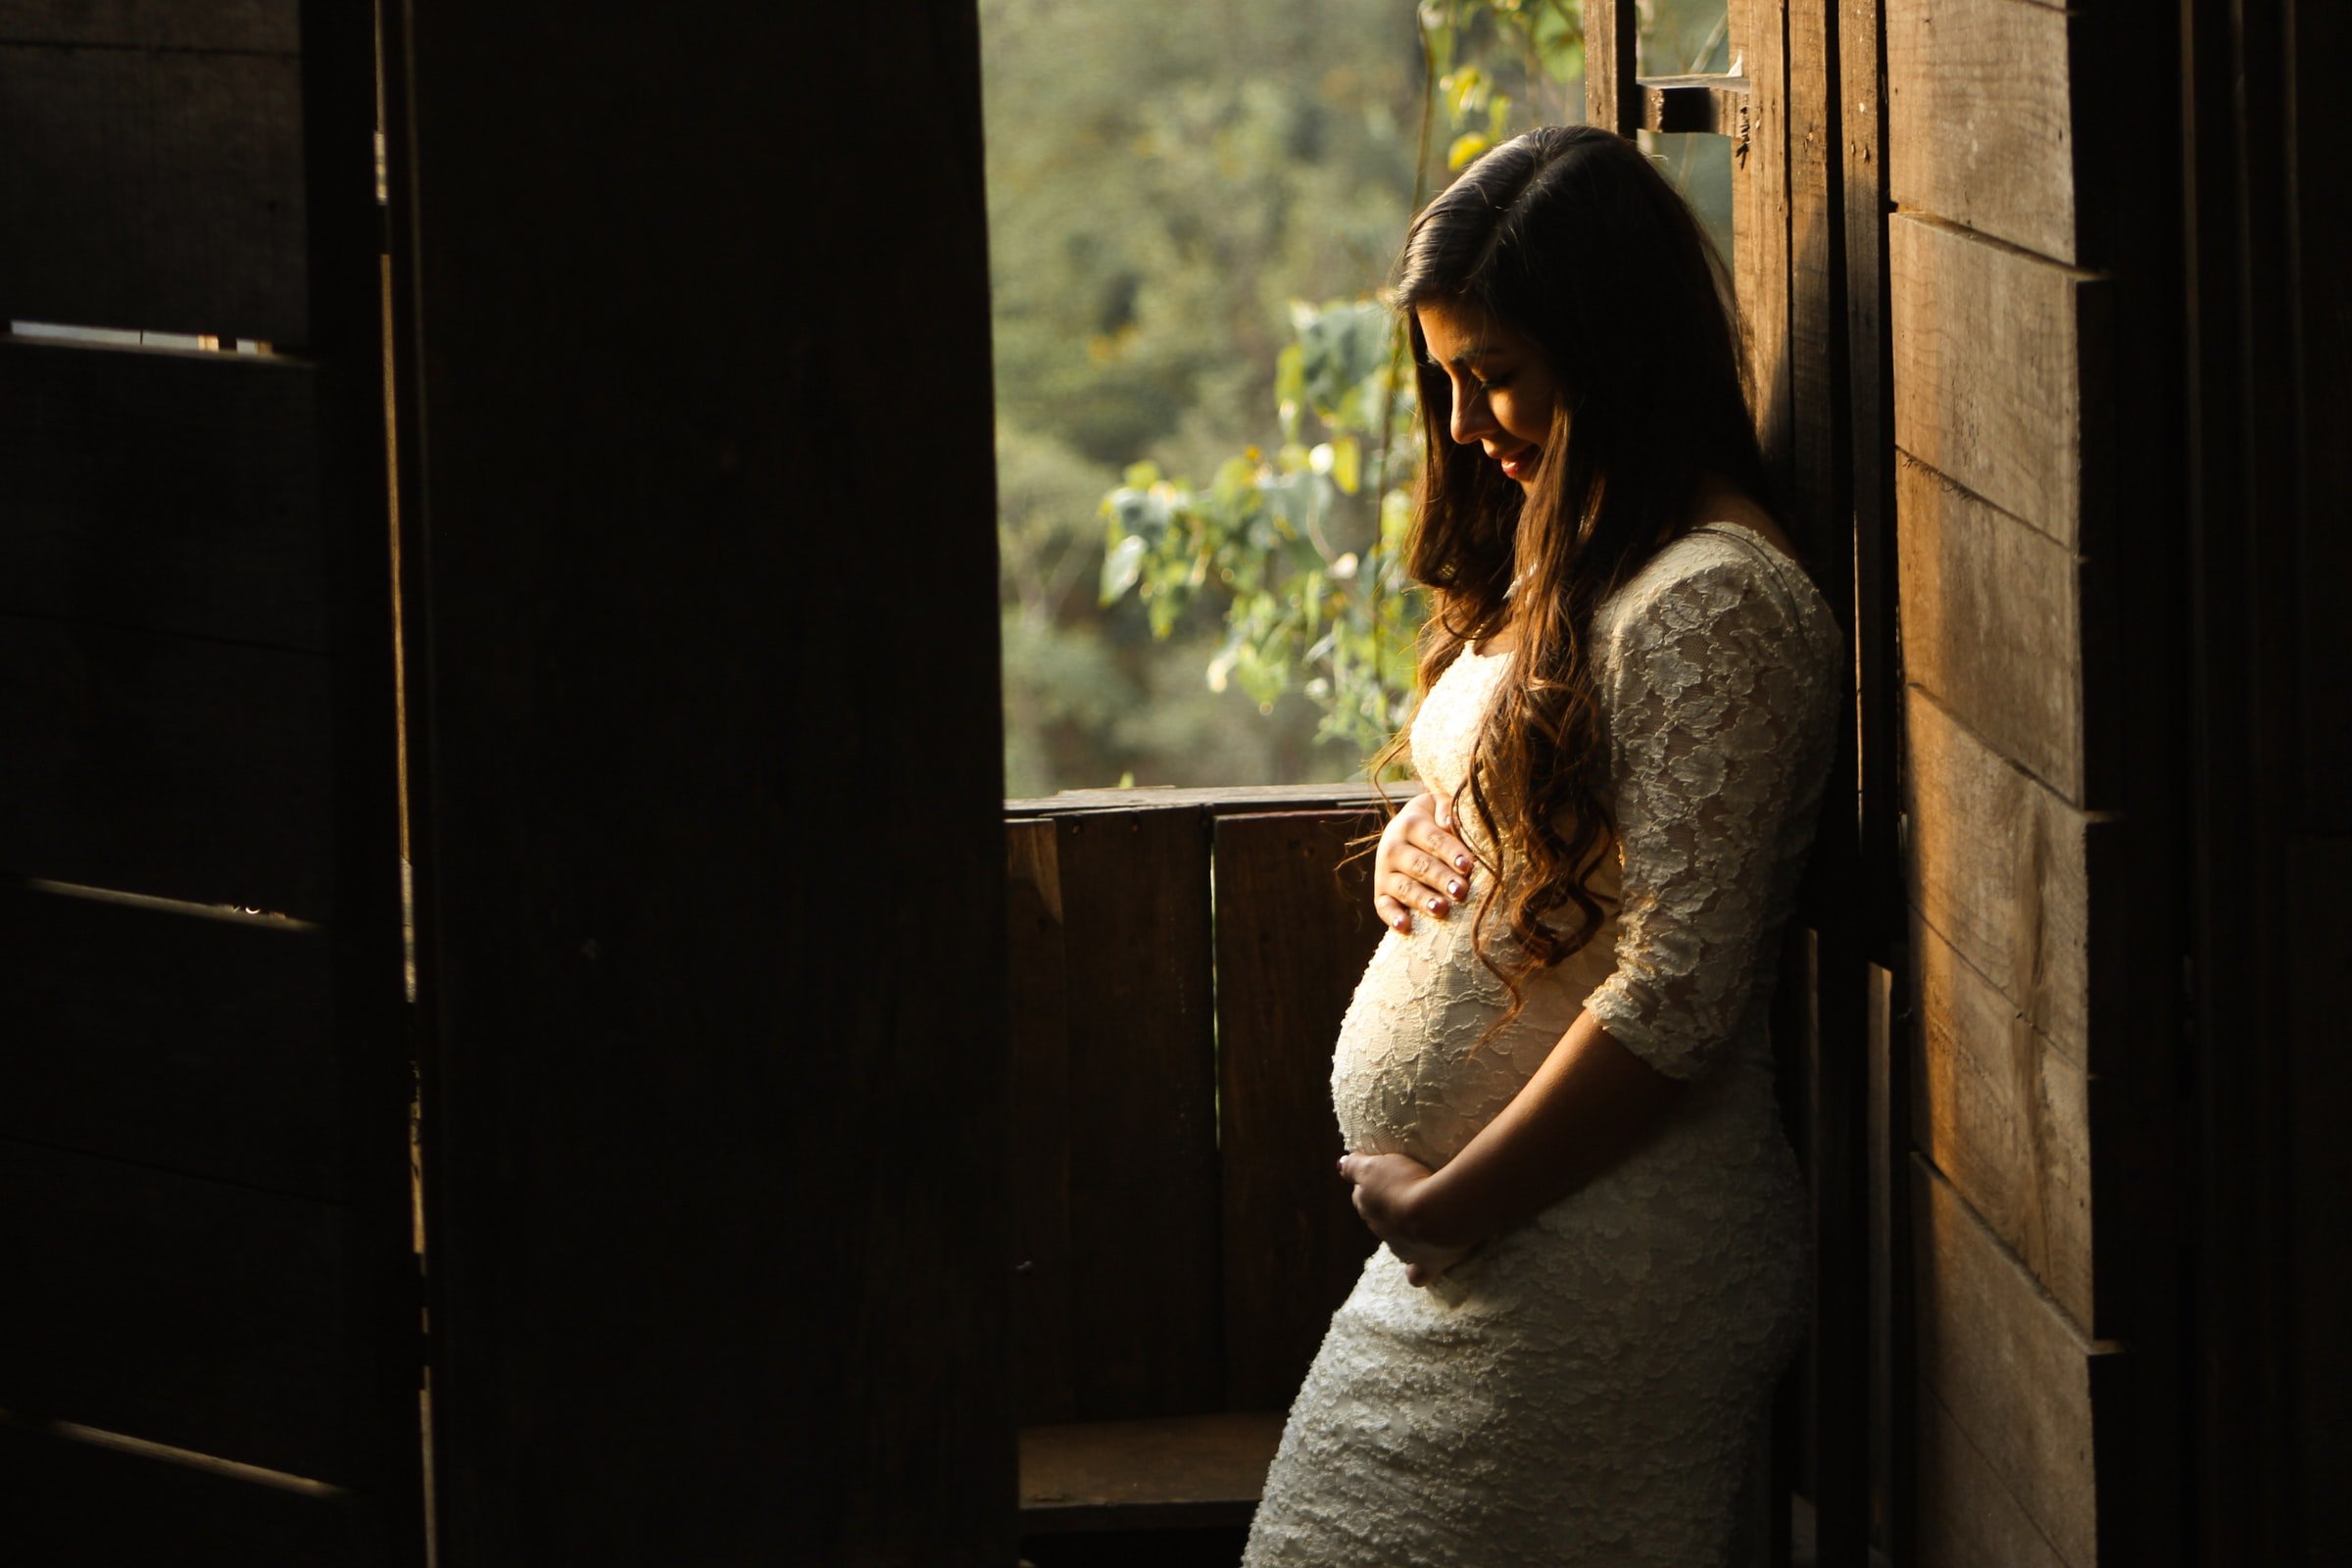 A pregnant woman | Source: Unsplash